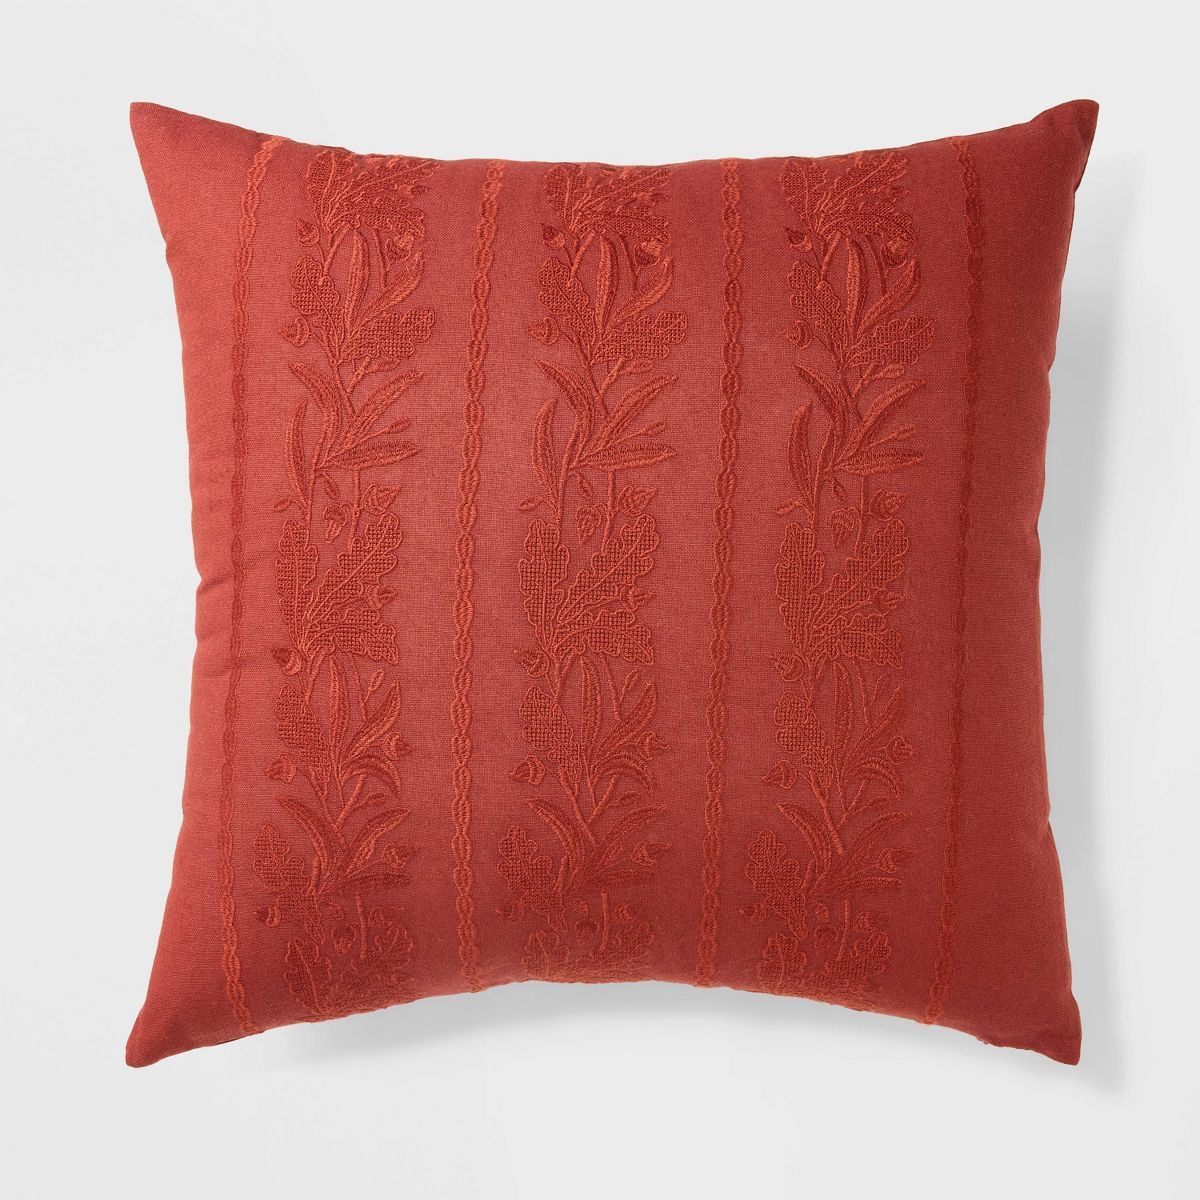 Oversize Tonal Embroidered Acorn Lumbar Throw Pillow - Threshold™ designed with Studio McGee | Target